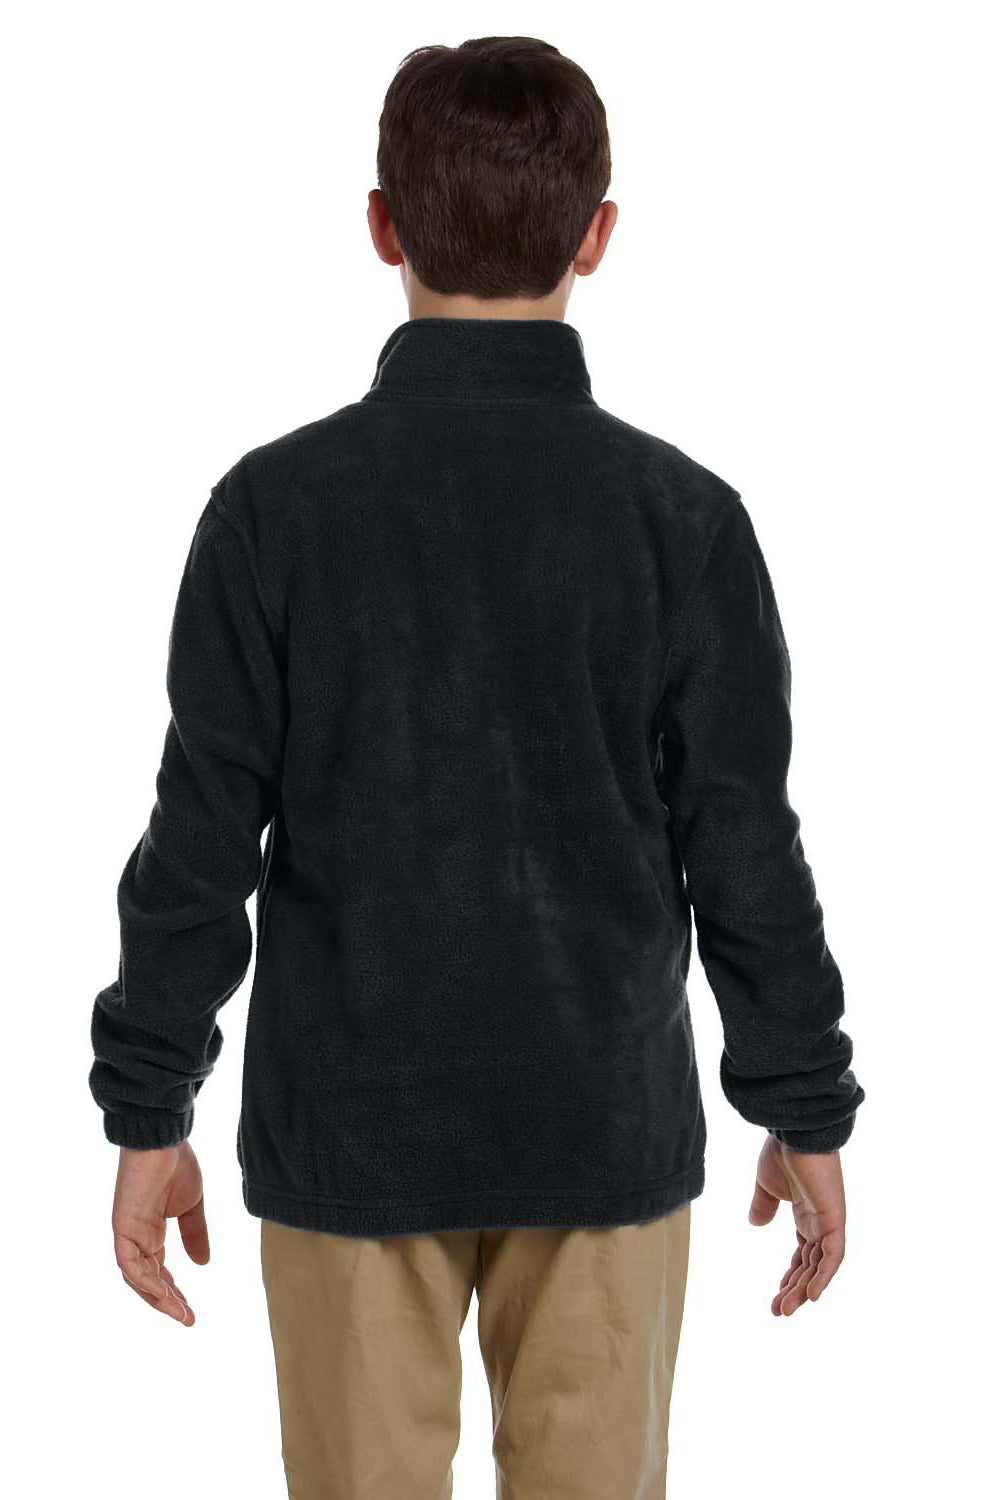 Harriton M990Y Youth Full Zip Fleece Jacket Black Back